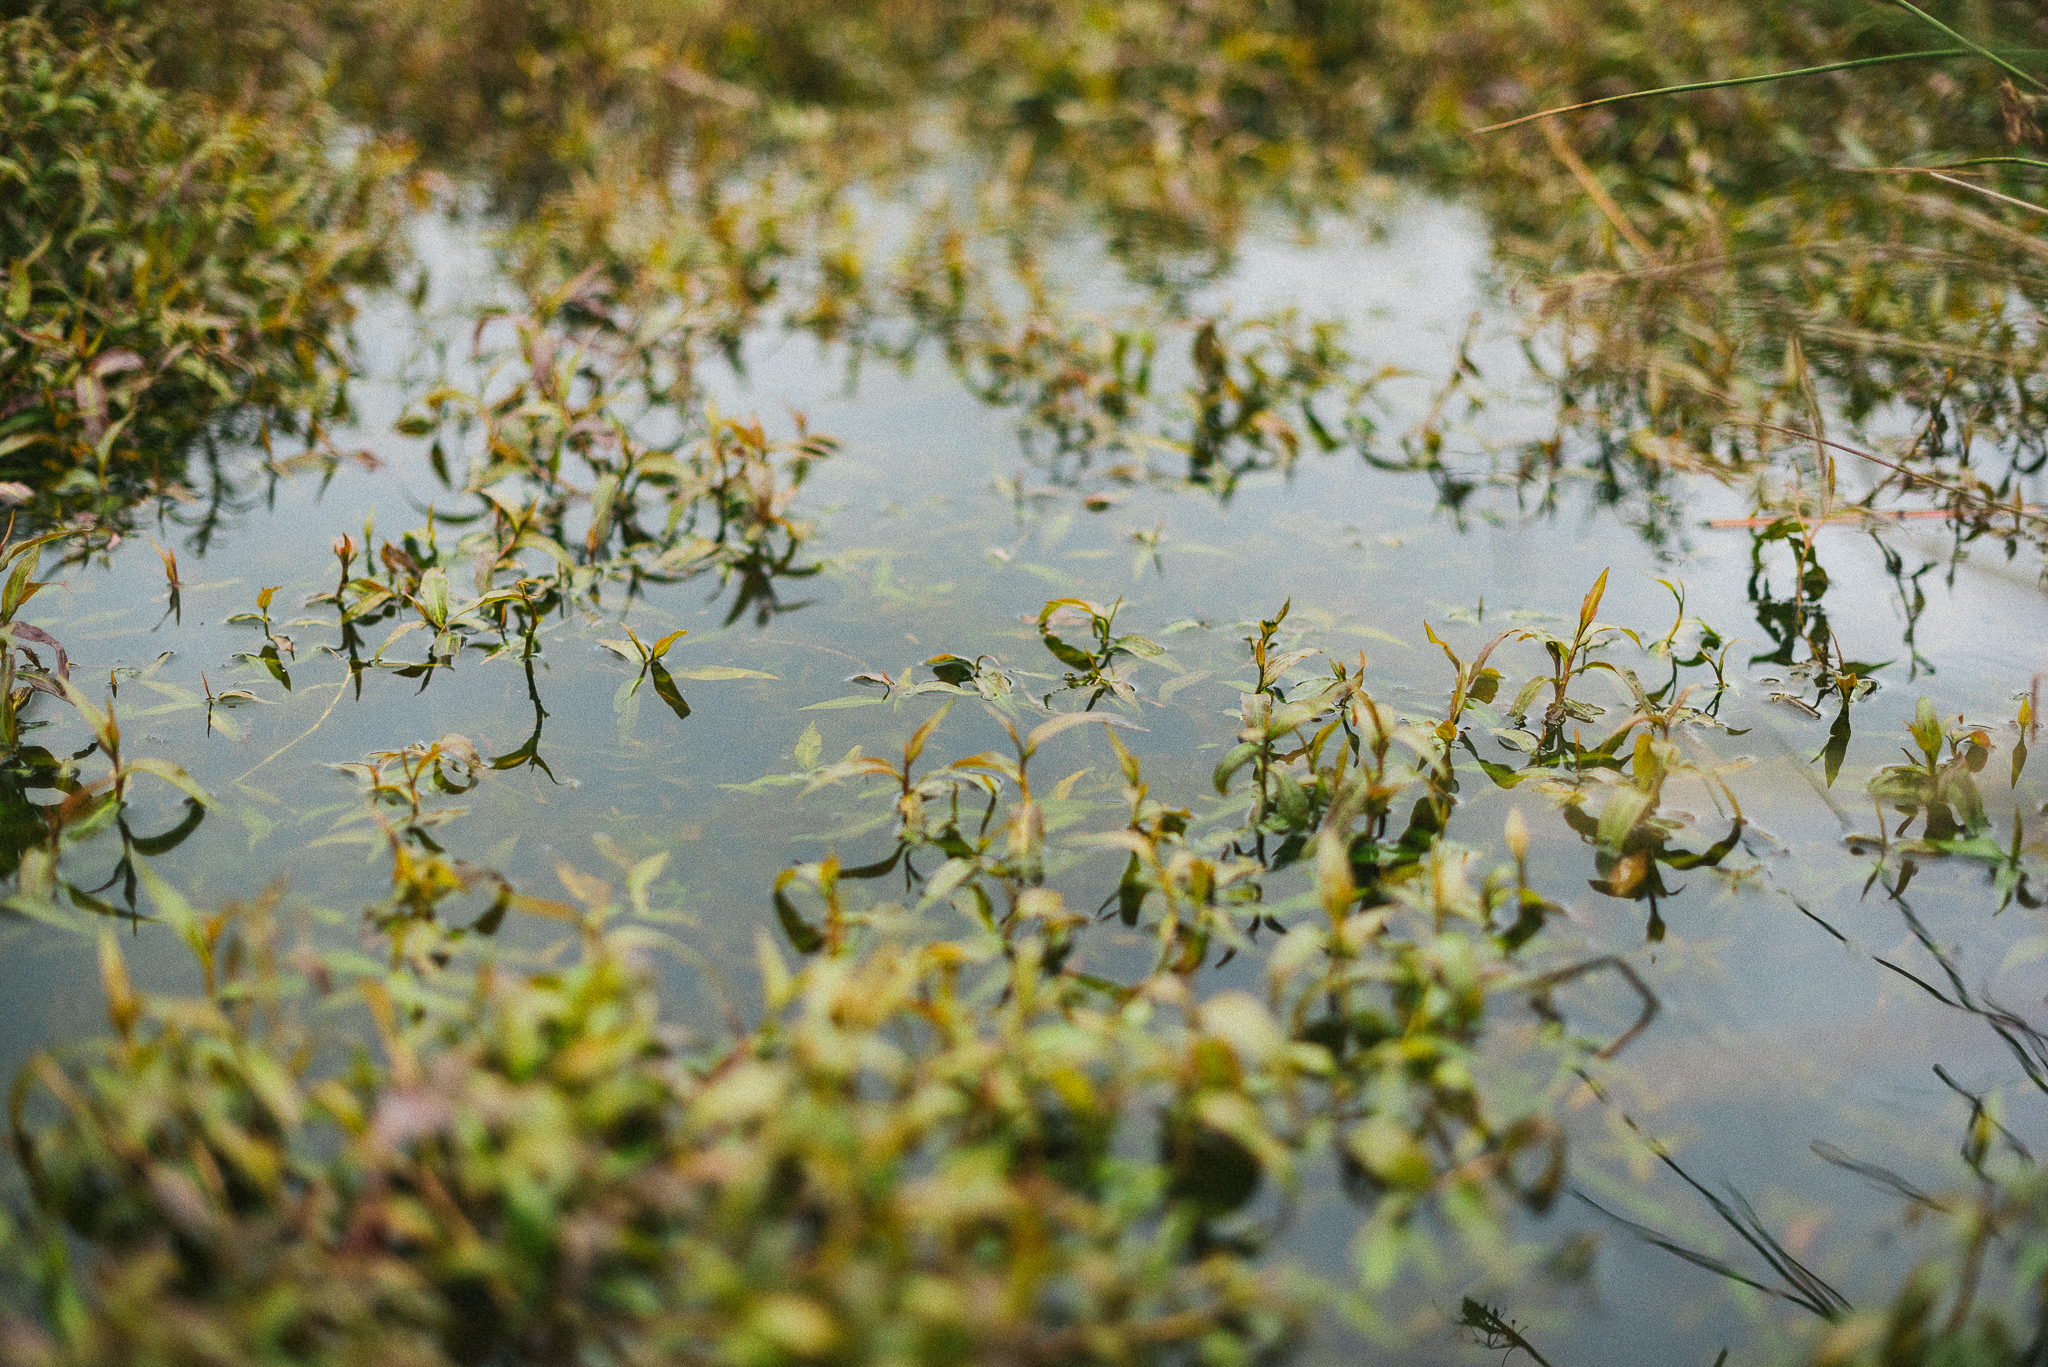 Close up of aquatic vegetation in water